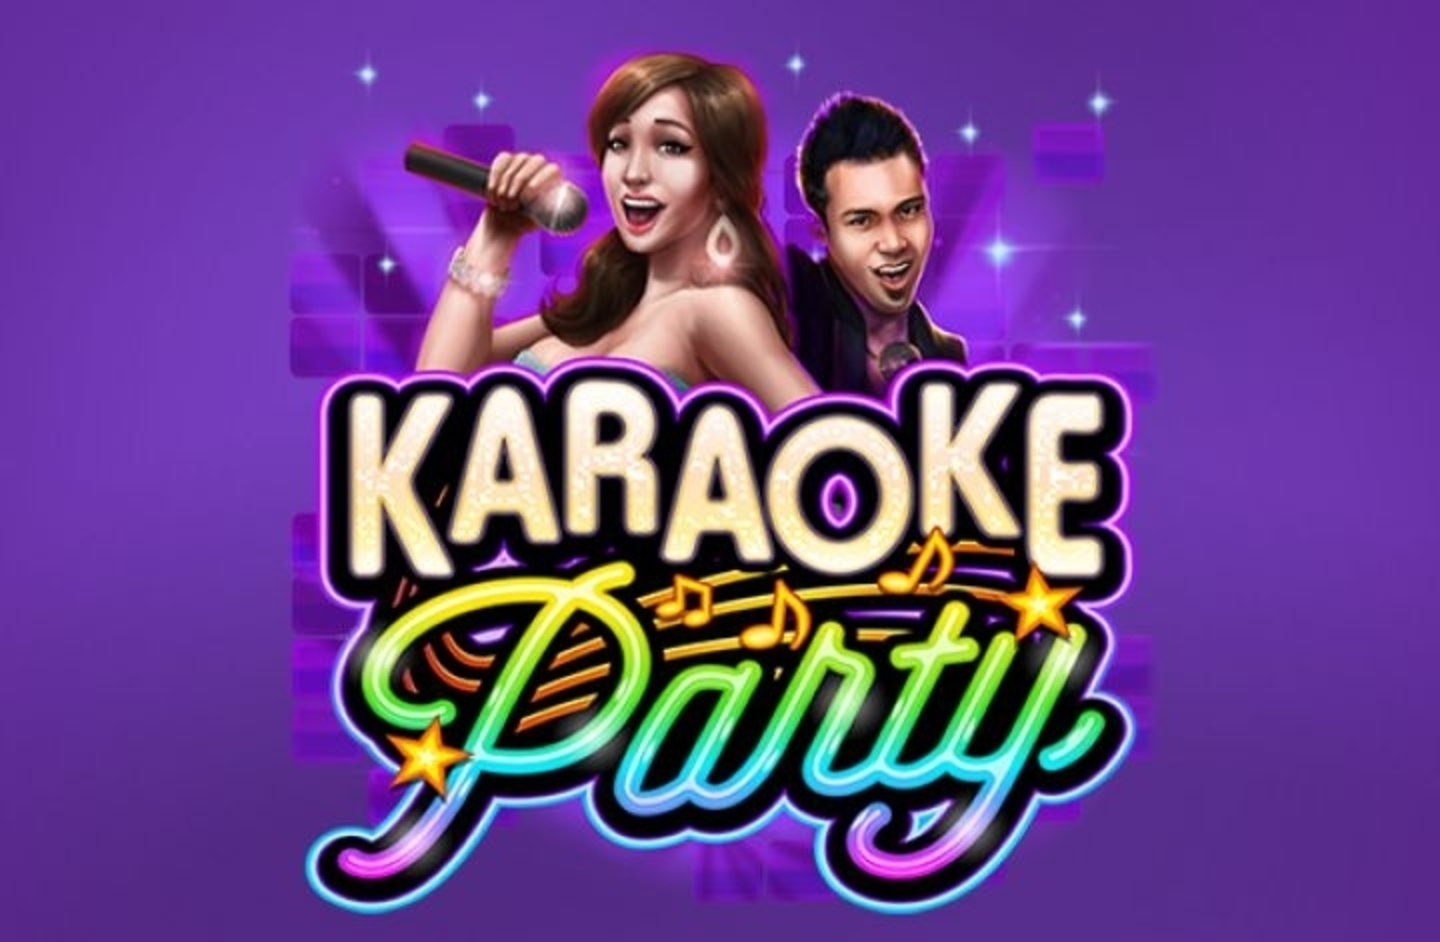 Karaoke Party demo